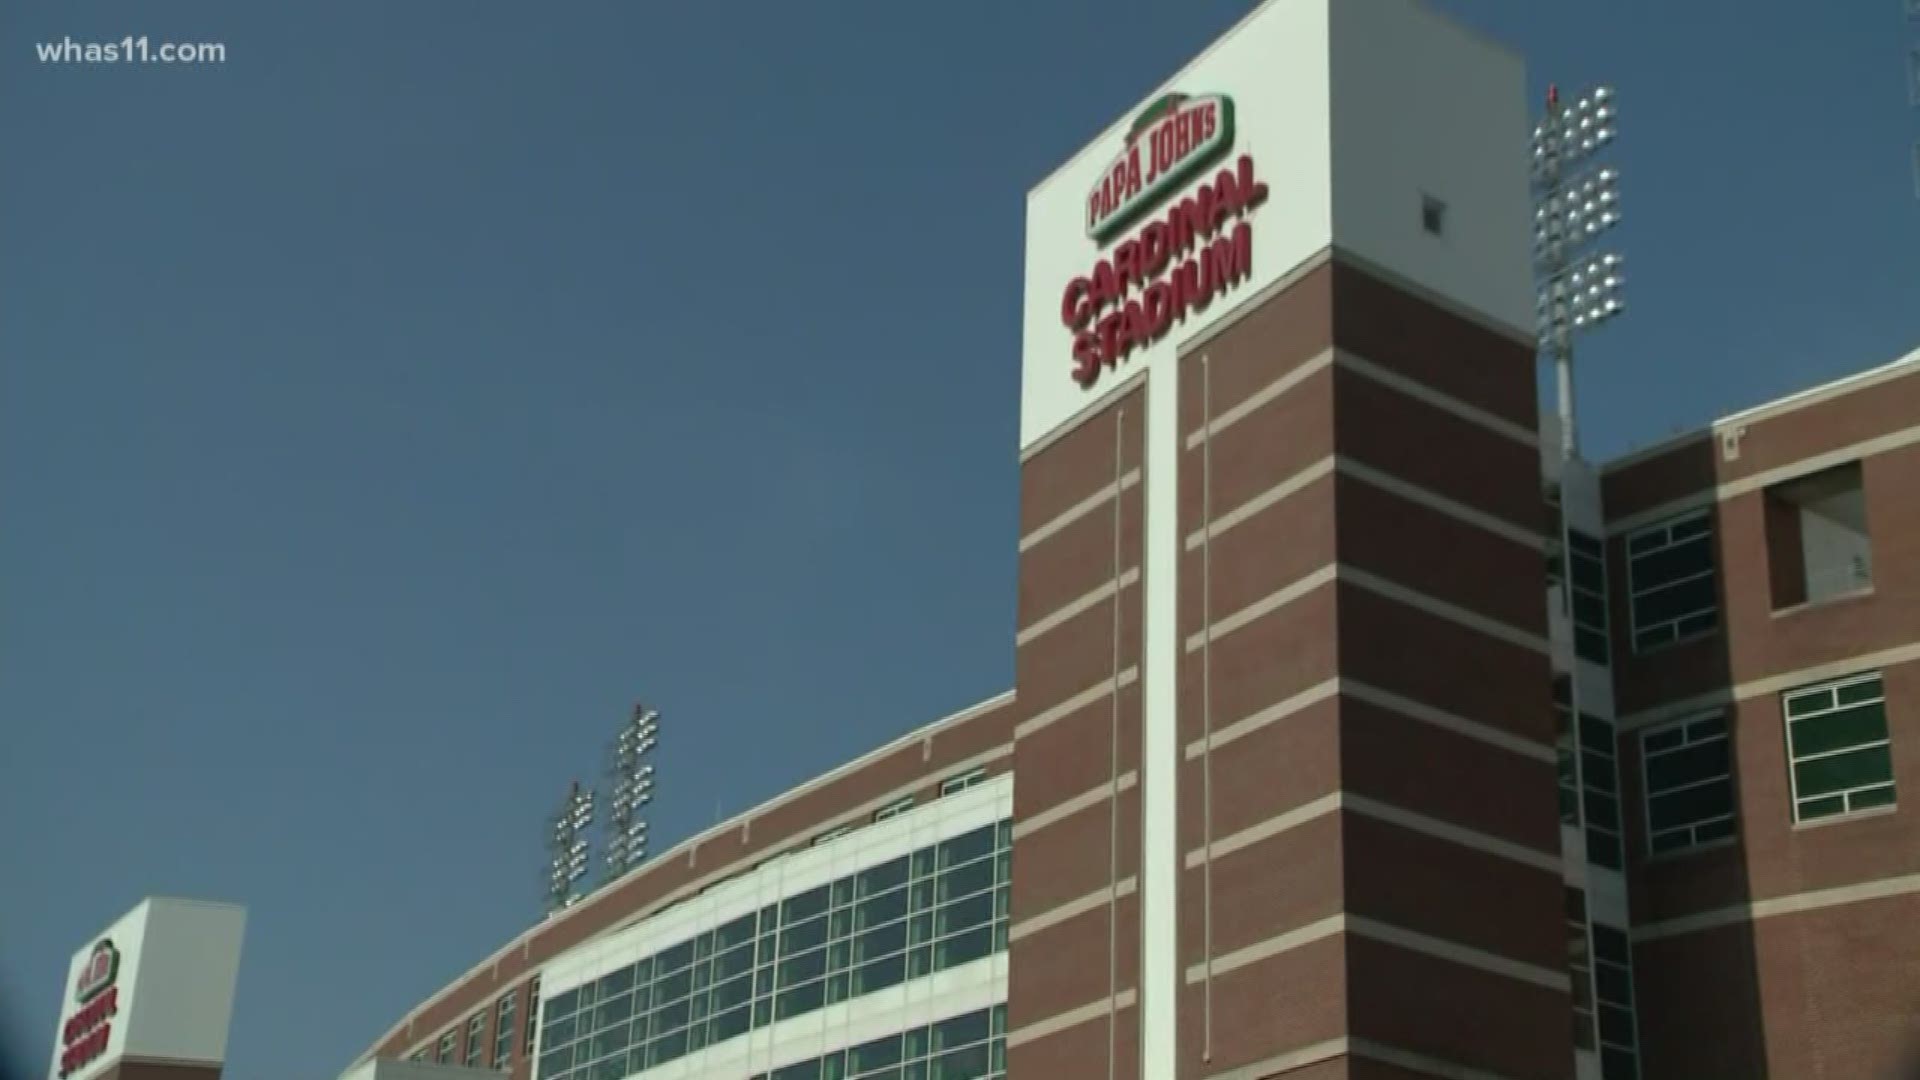 University of Louisville removes Papa John's name from football